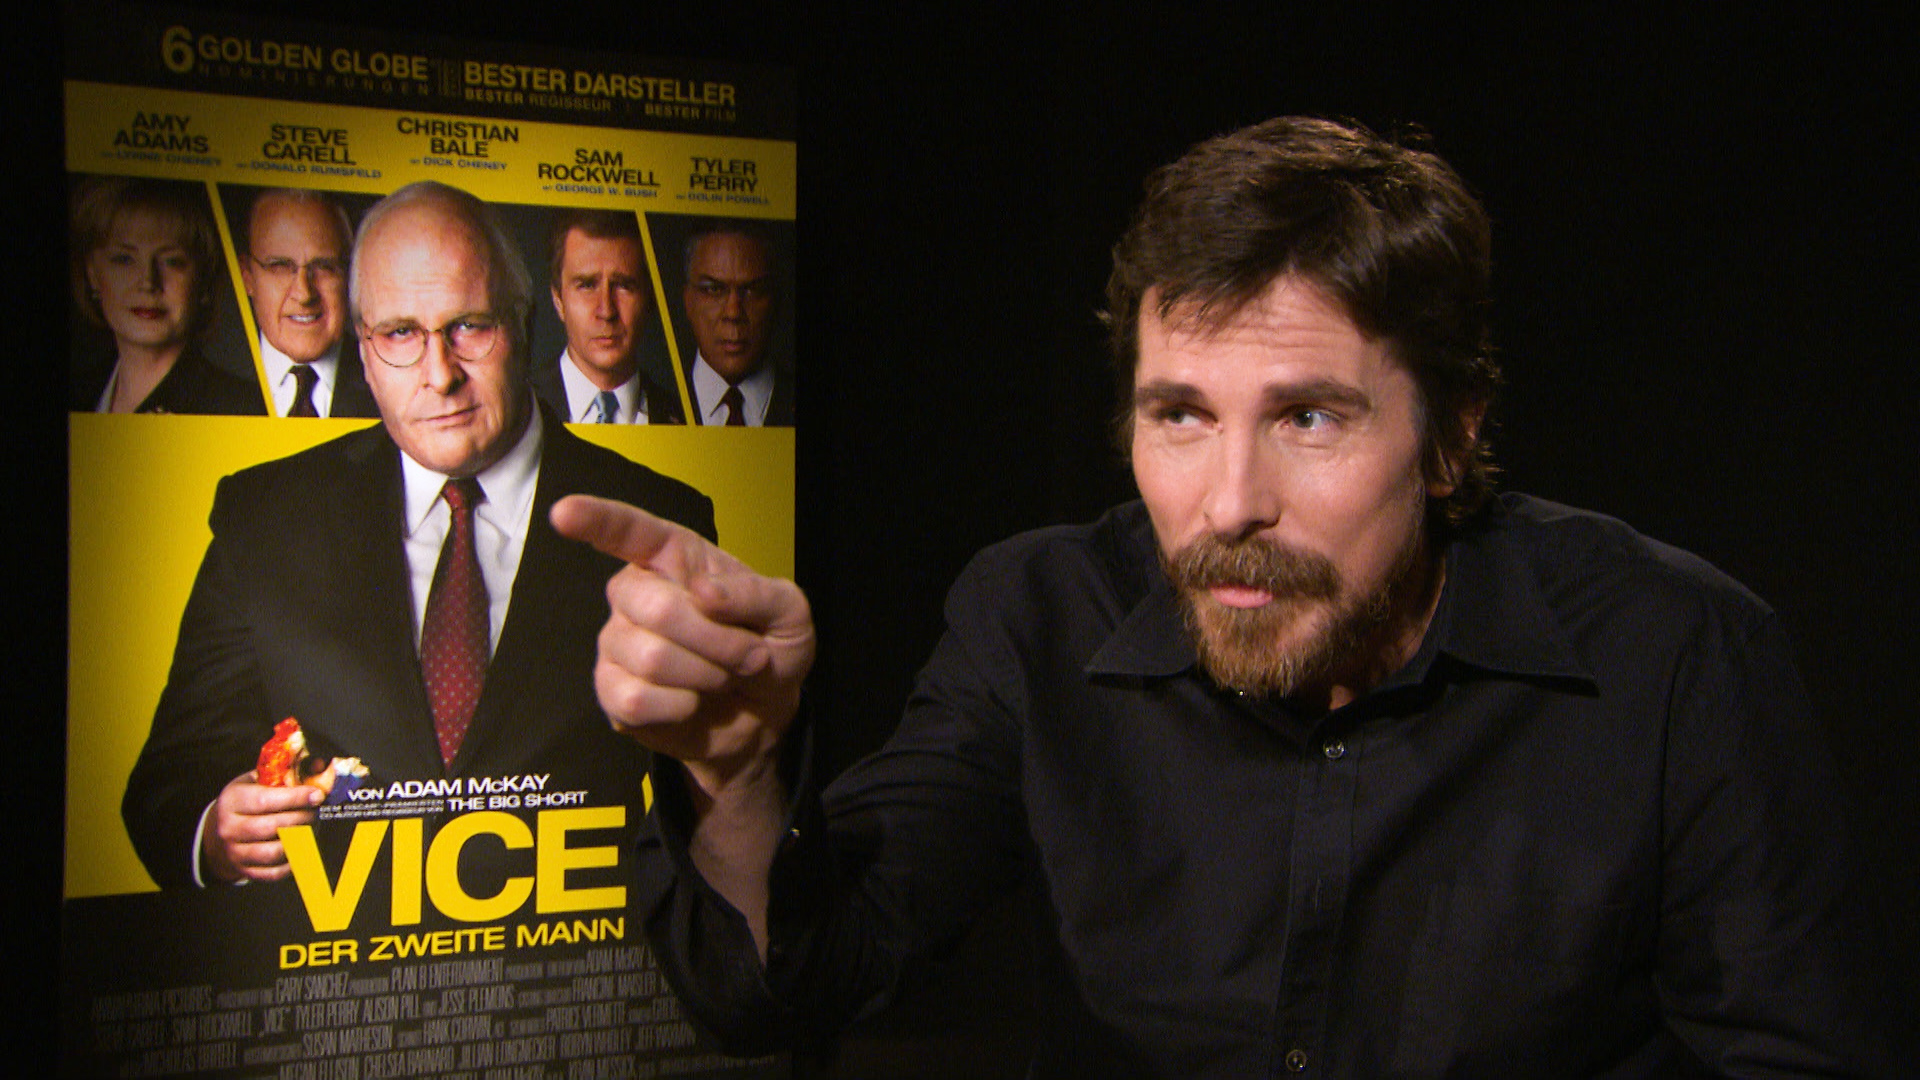 Steven Gätjen im Interview mit Christian Bale